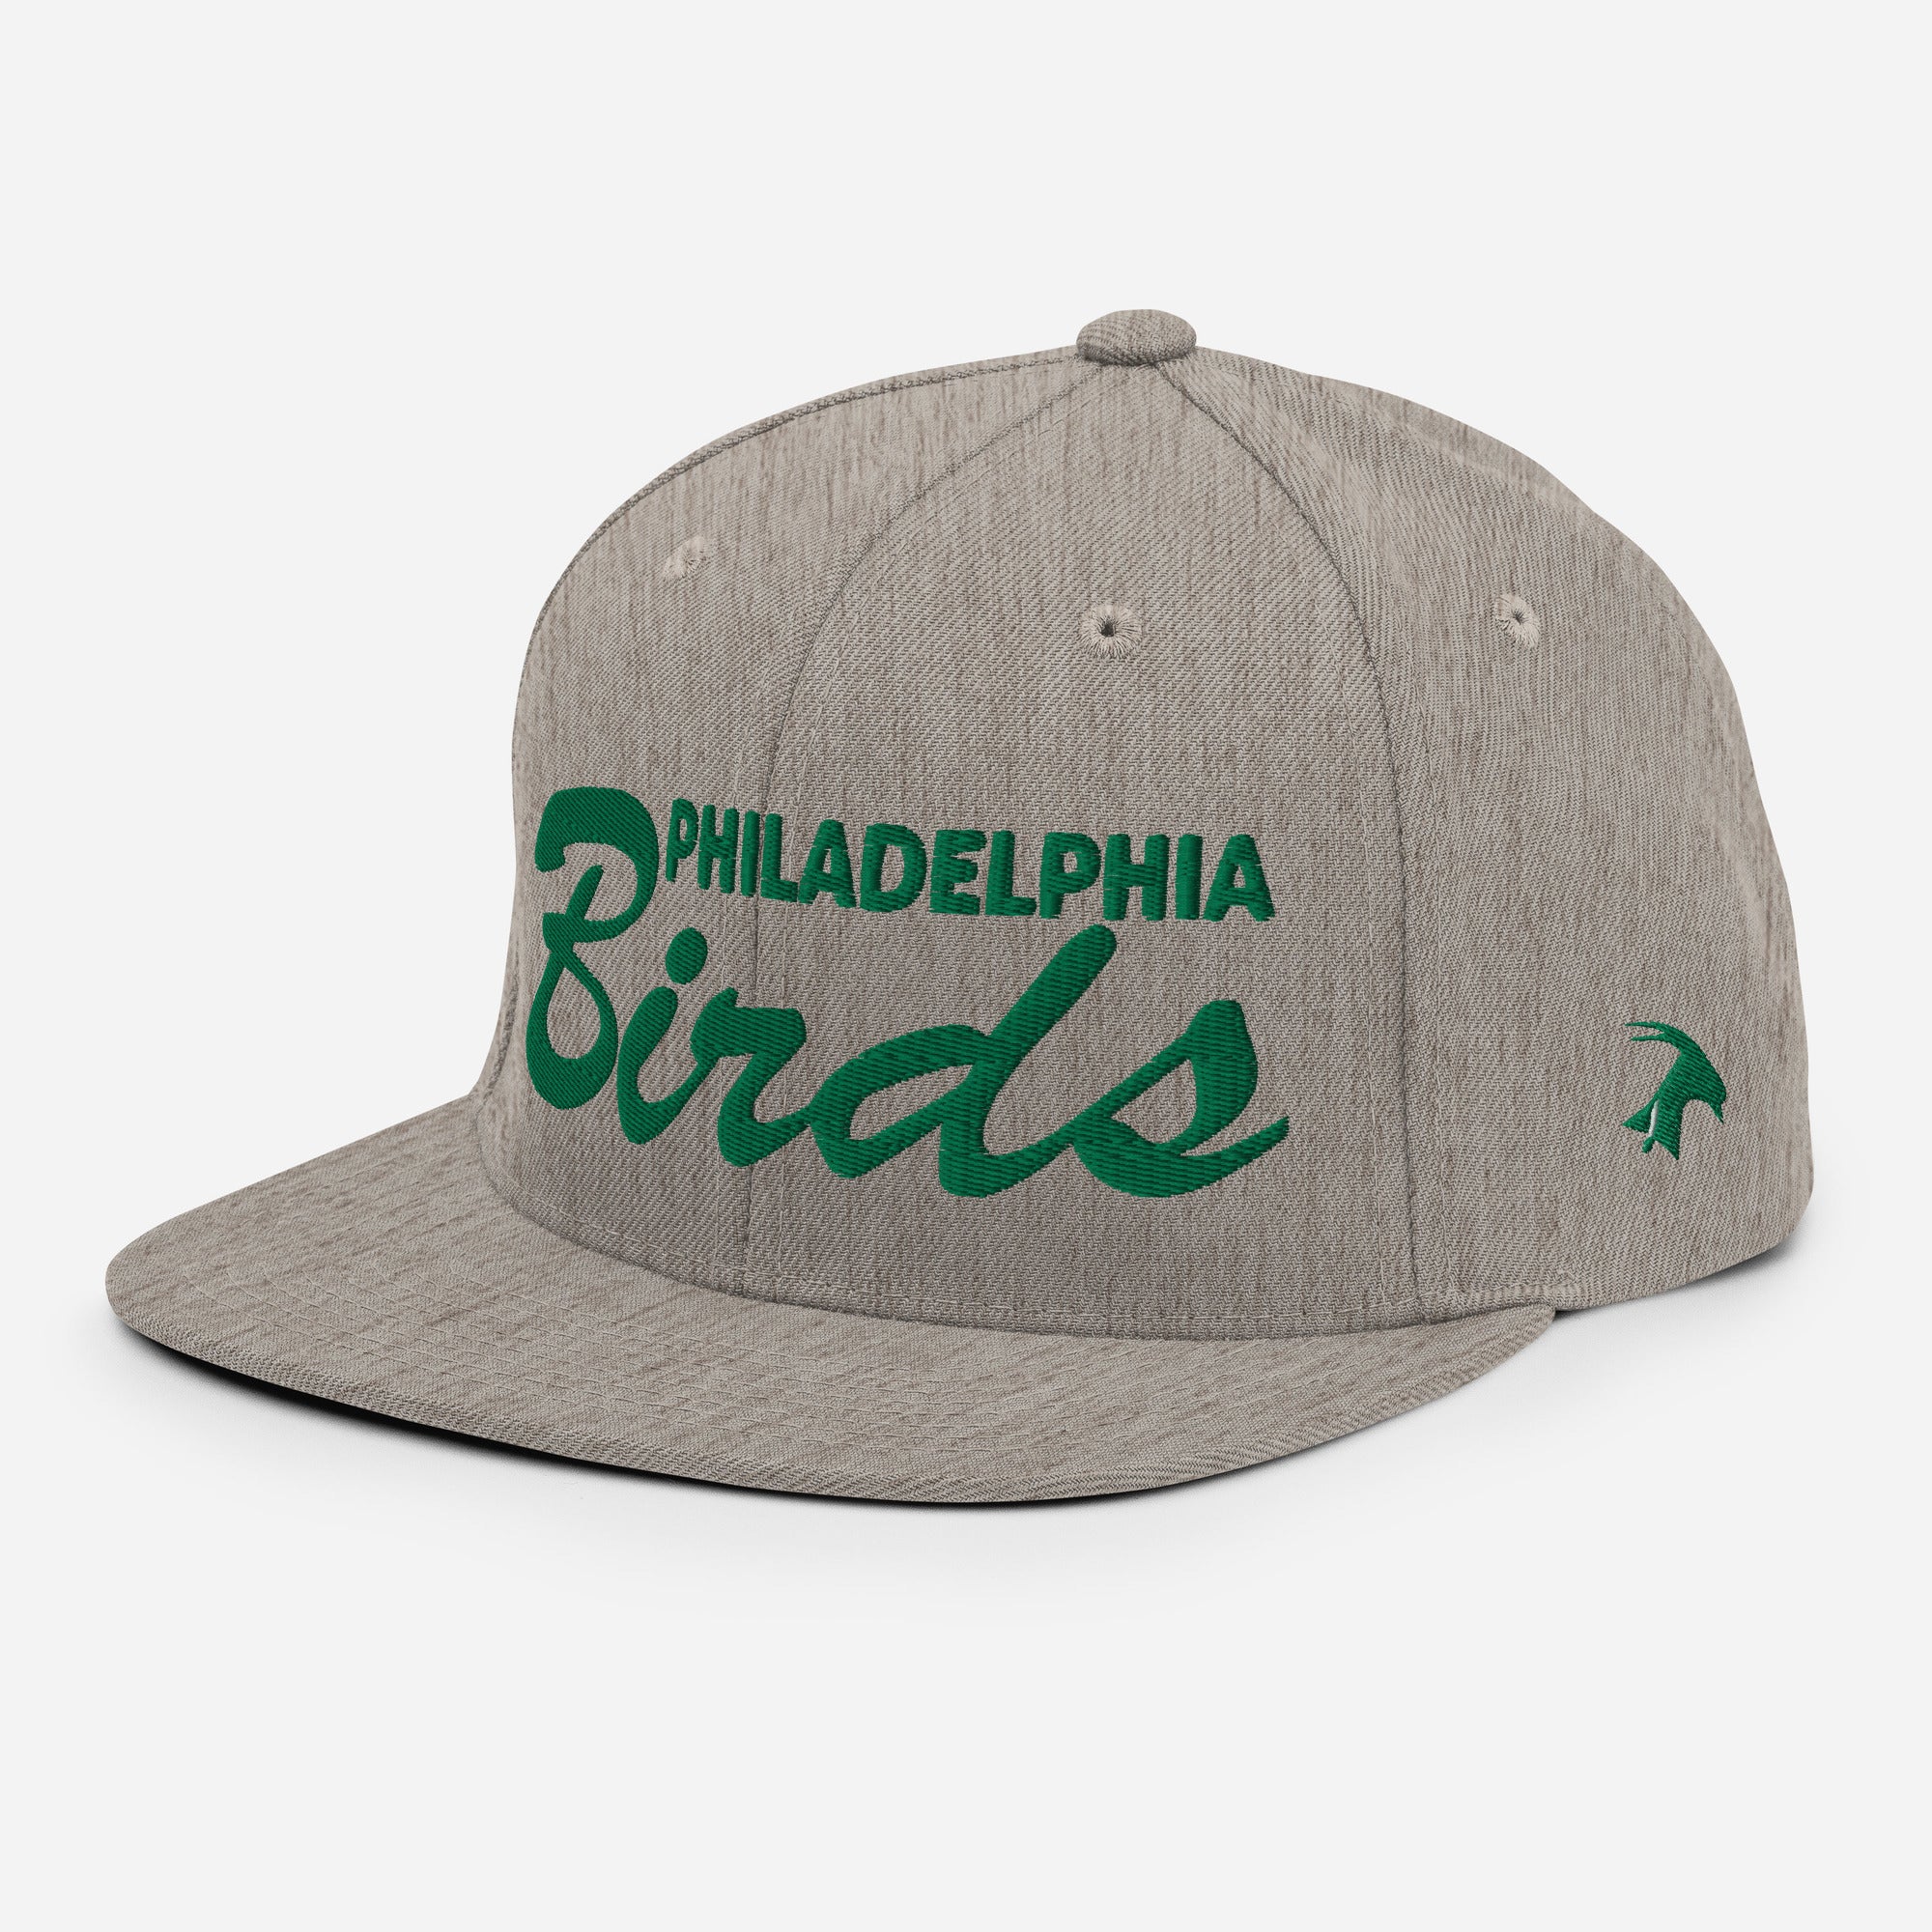 "Philadelphia Birds" Snapback Hat